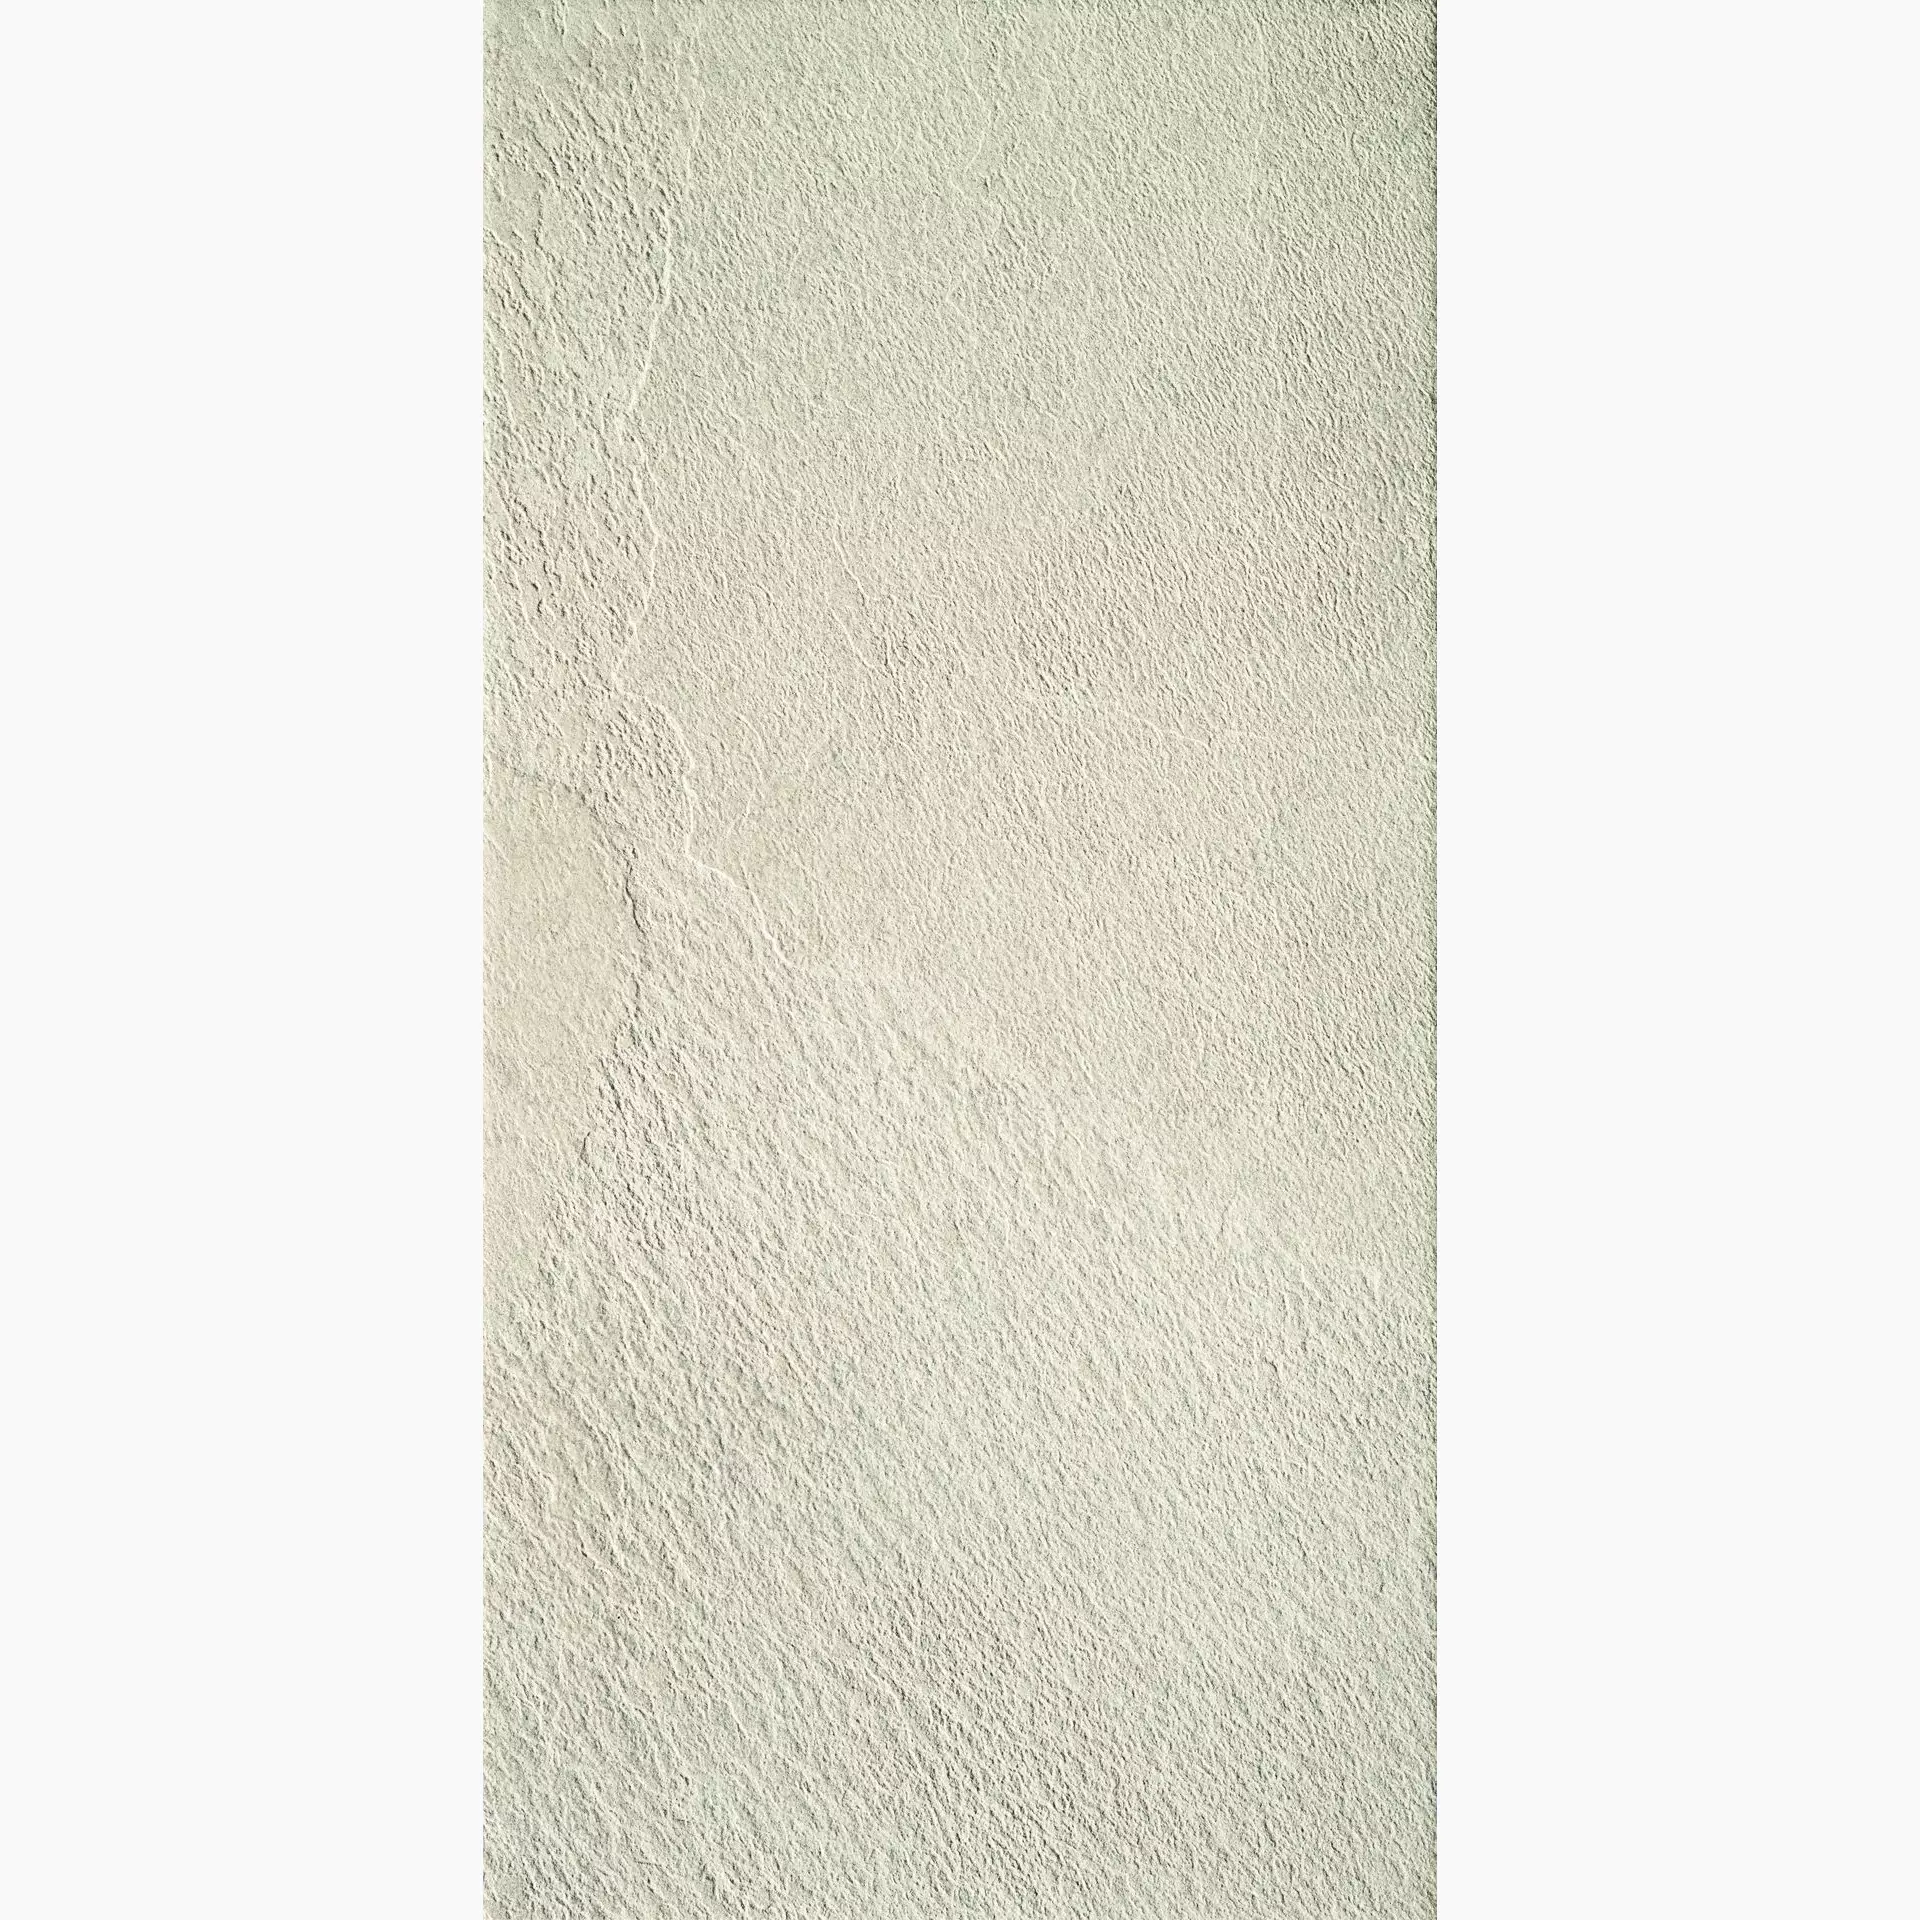 Casalgrande Padana Mineral Chrom White Naturale – Matt 6790061 naturale – matt 30x60cm rectified 9mm